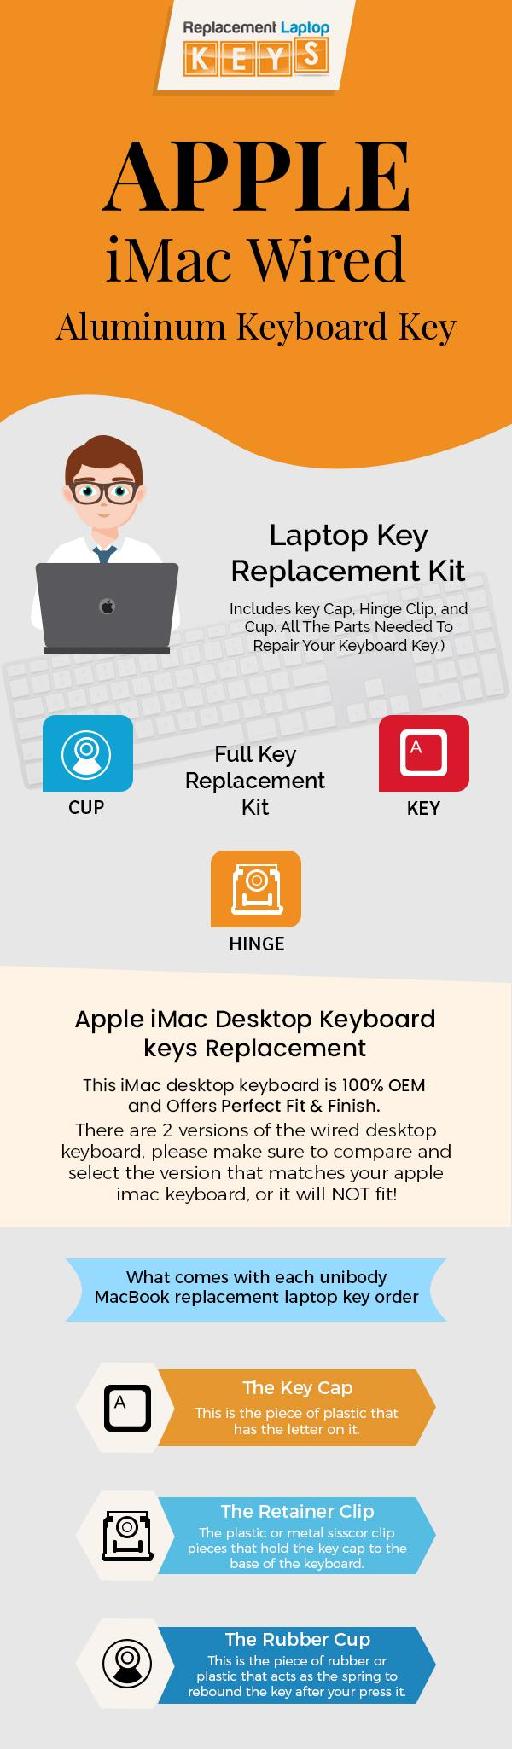 Shop Genuine Apple iMac Wired Aluminum Keyboard Keys from Replacement Laptop Keys